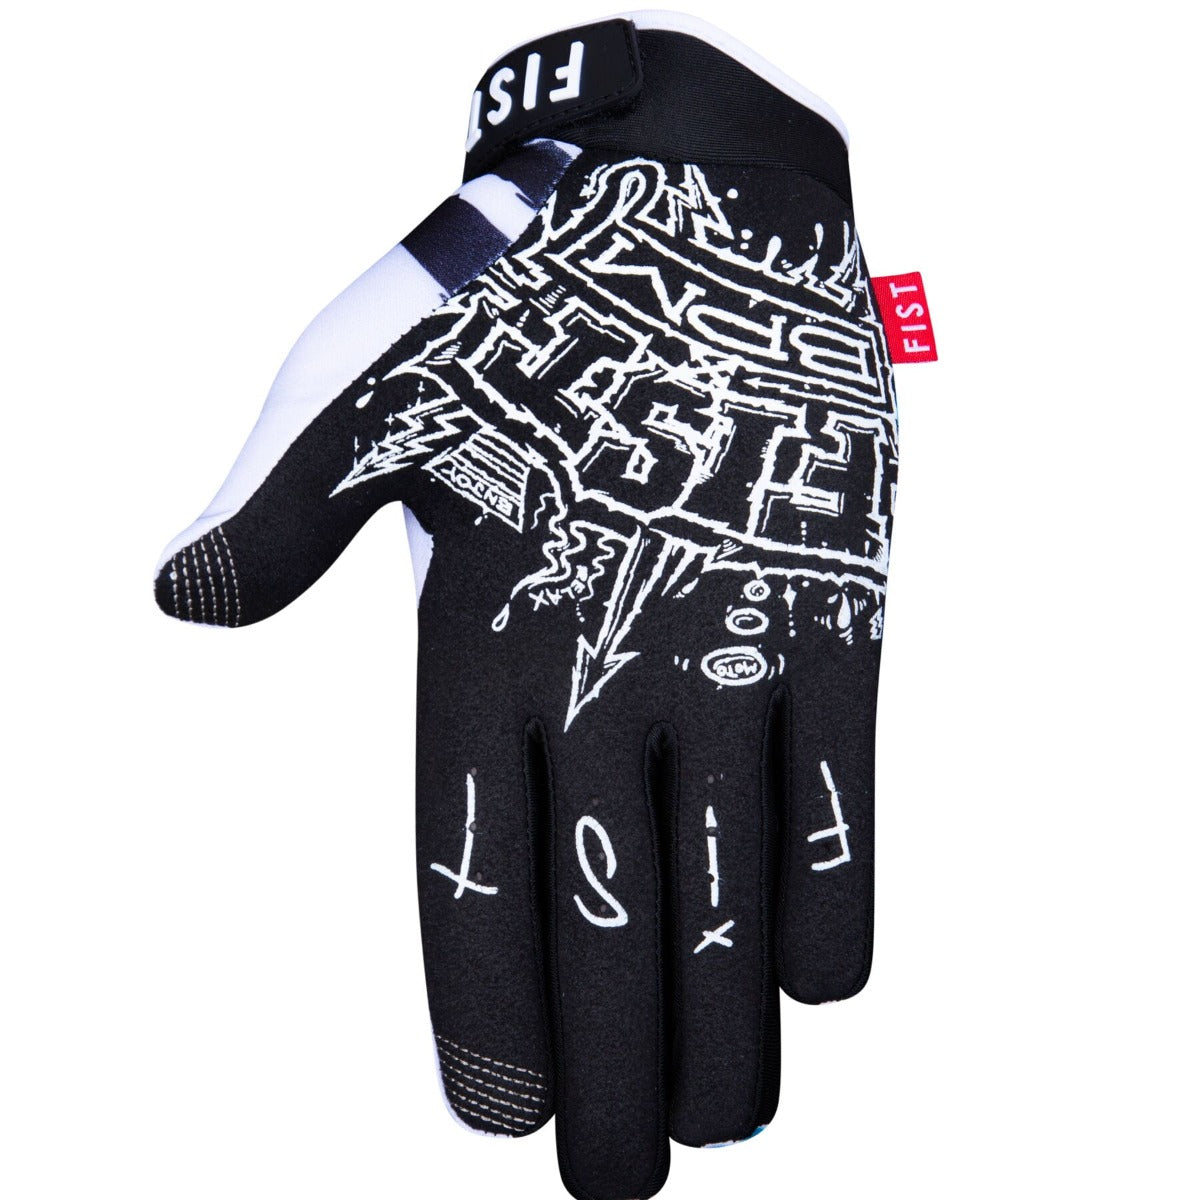 FIST Handwear Chapter 18 Skate Protection Gloves - FIST X BPM - Palm